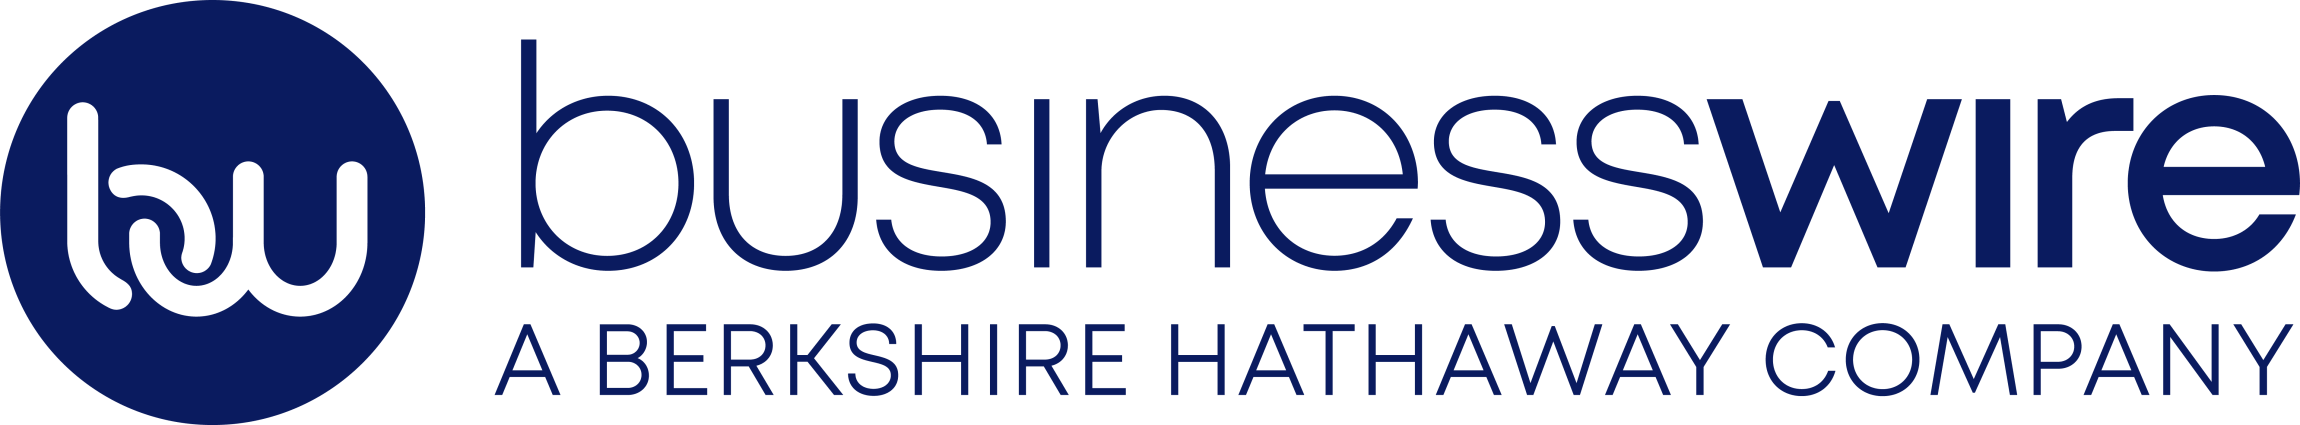 BusinessWire logo